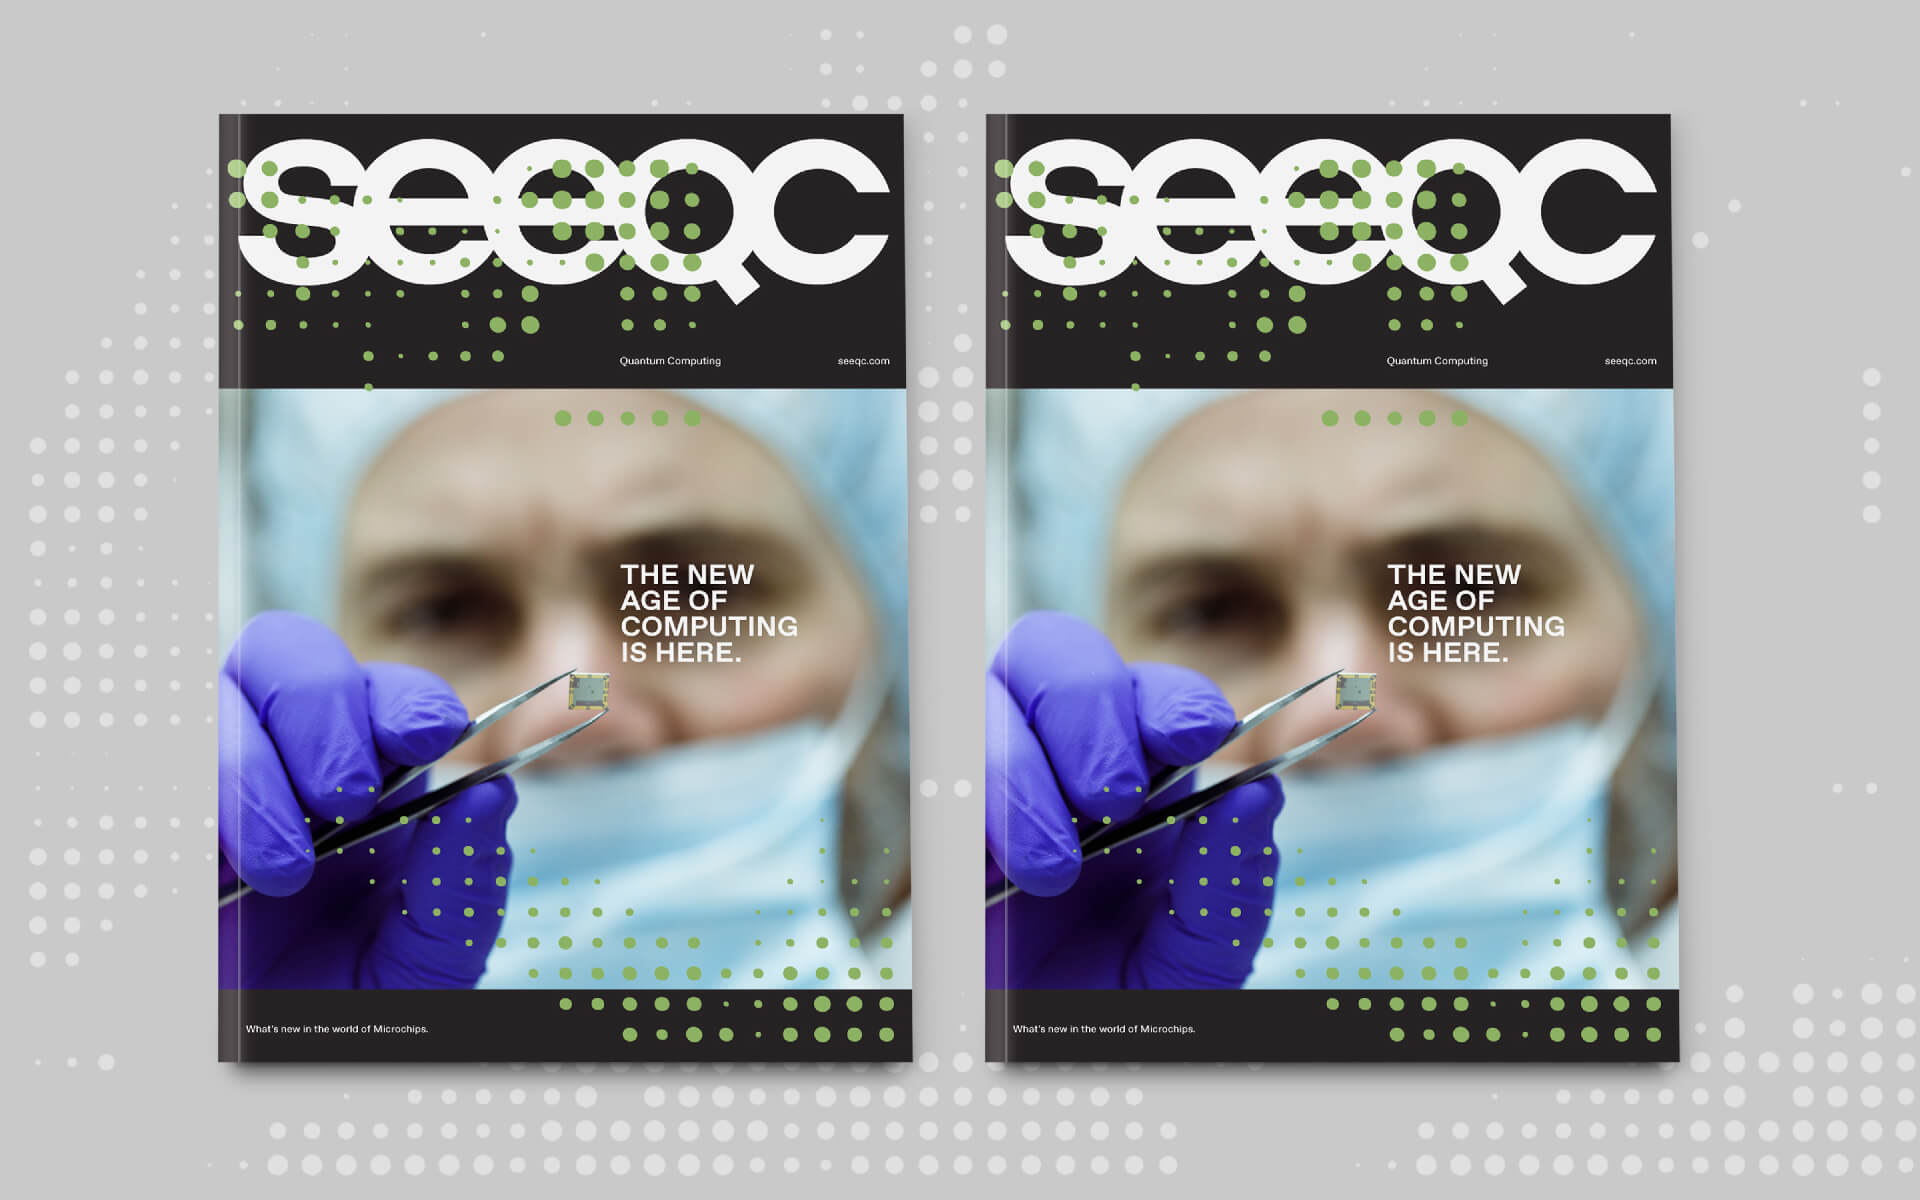 SEEQC_magazine2